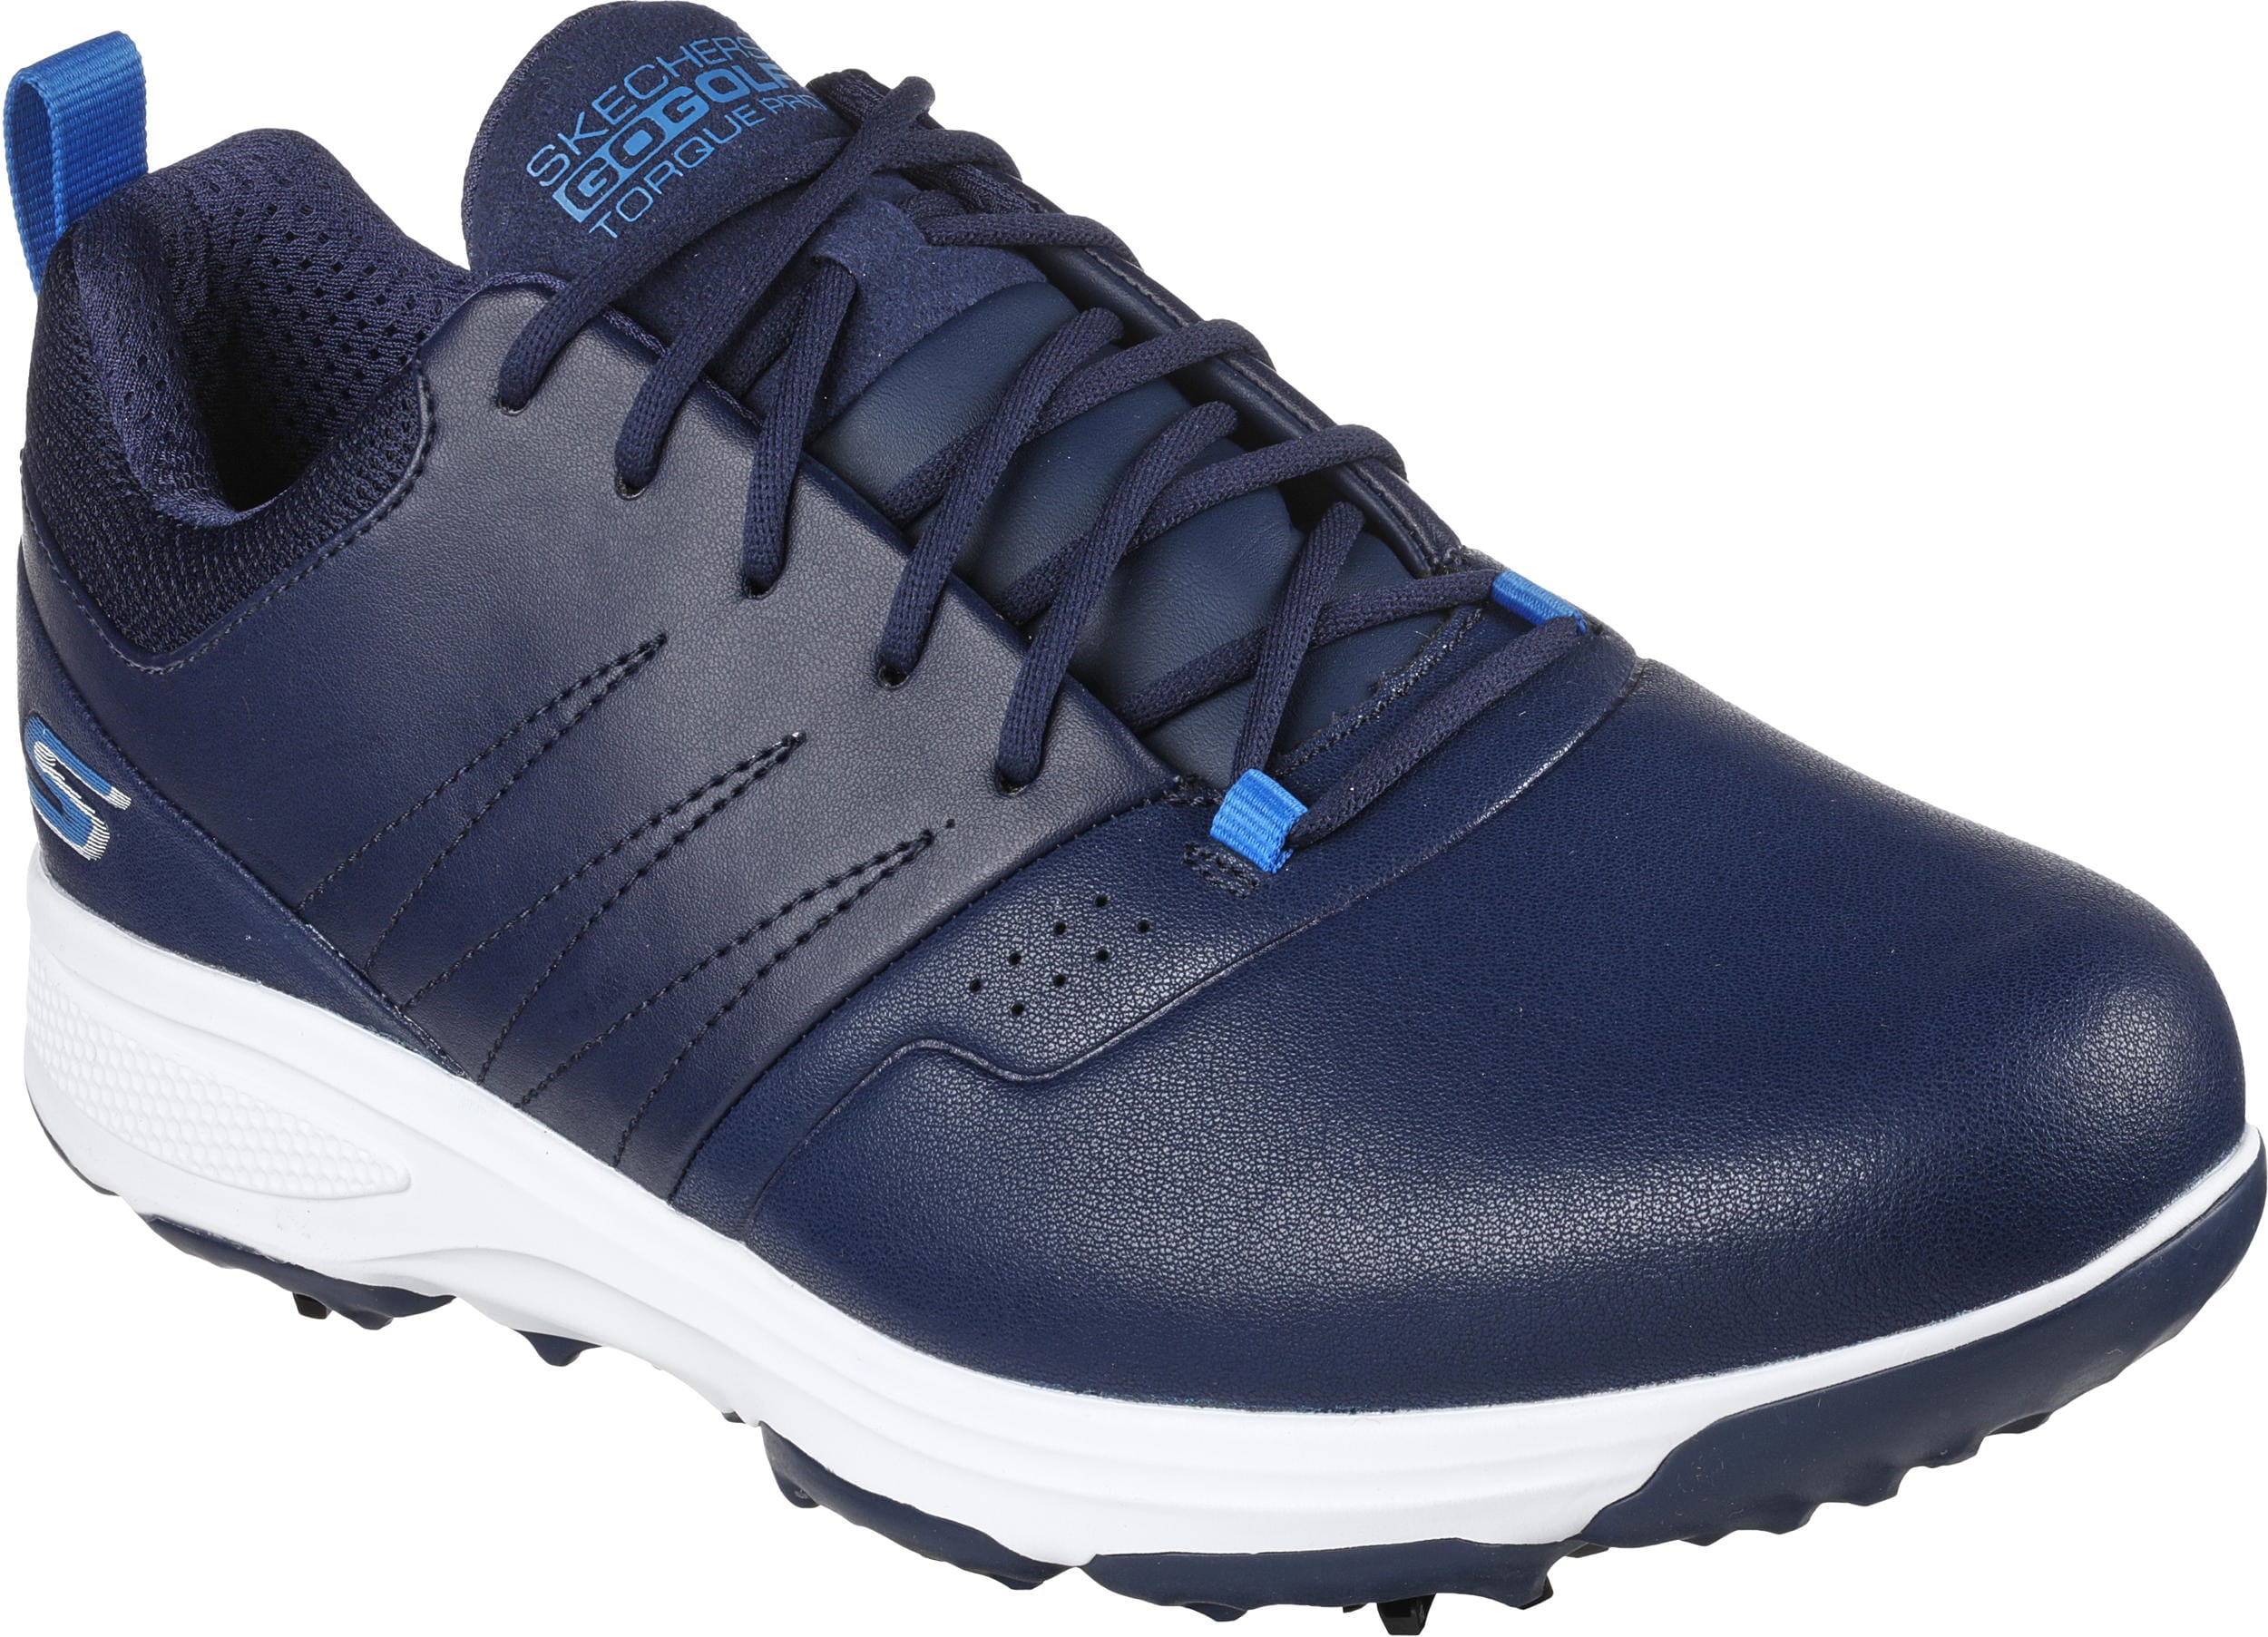 Skechers Go Golf Torque Pro Golfschuh, navy/blue